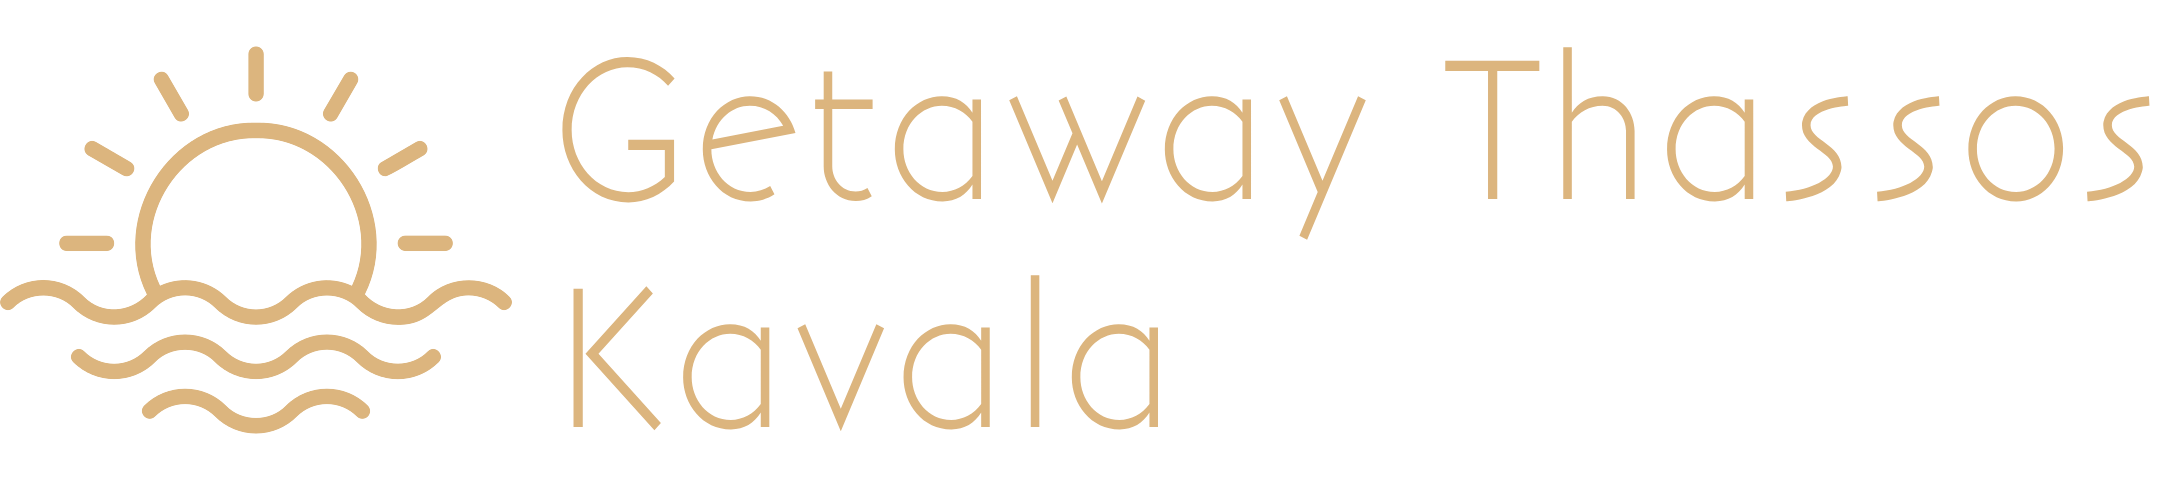 Getaway Thassos Kavala | Events Archives - Getaway Thassos Kavala